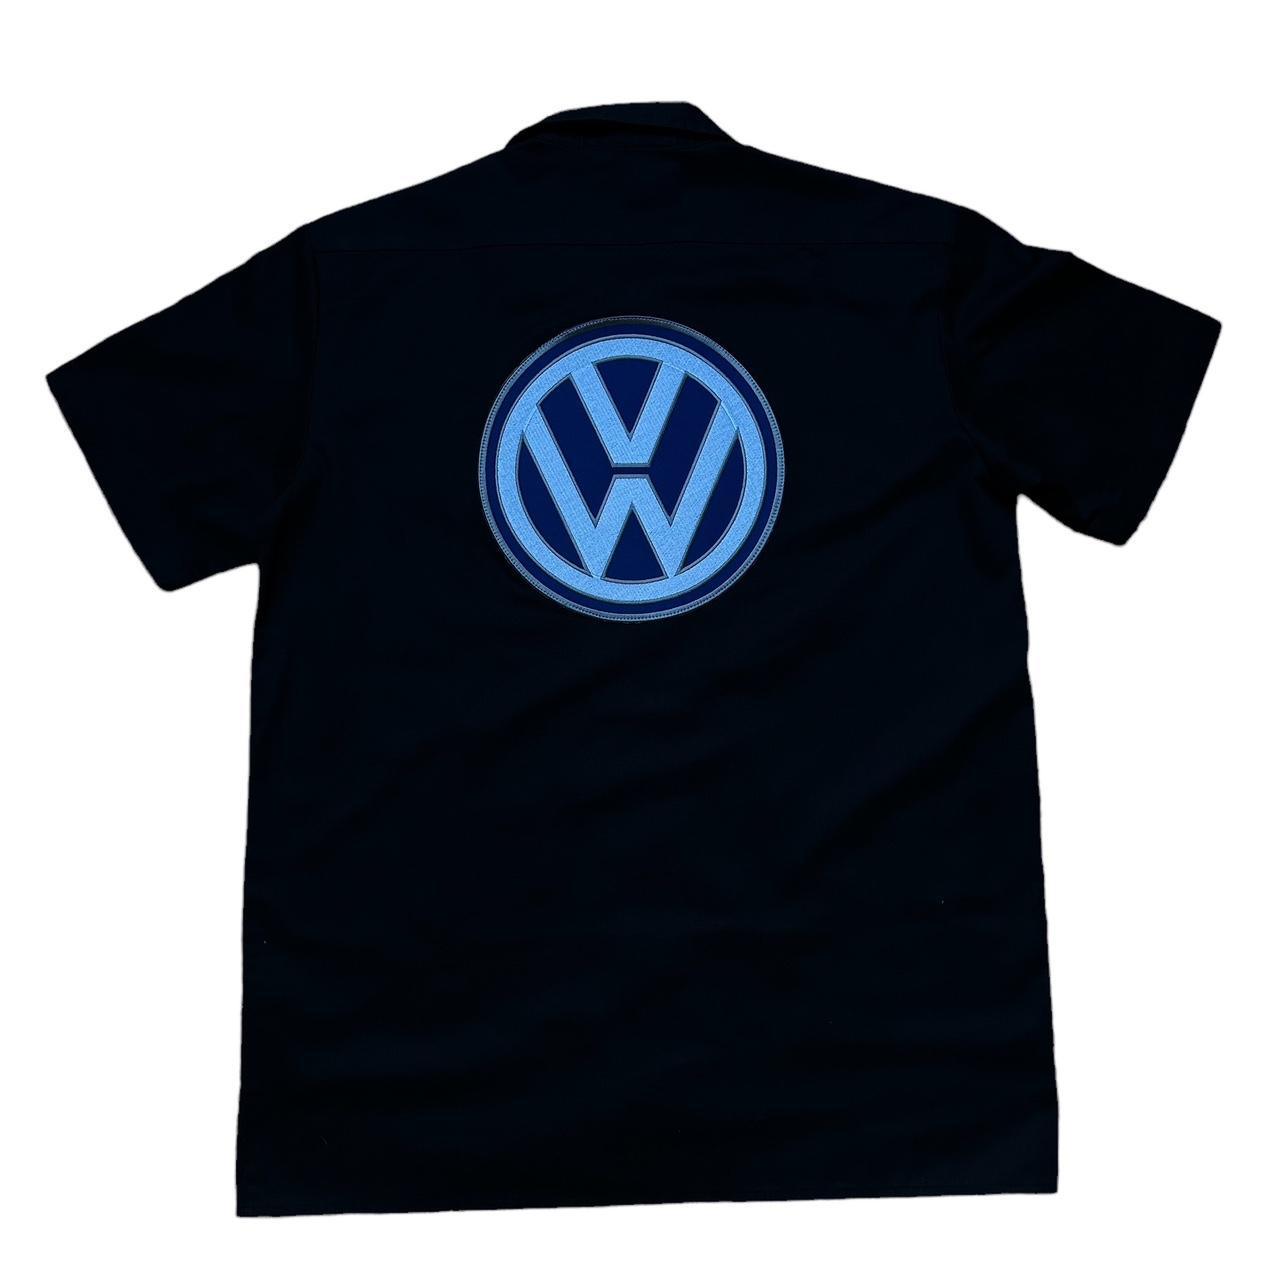 Volkswagen black dickies workwear shirt - Known Source